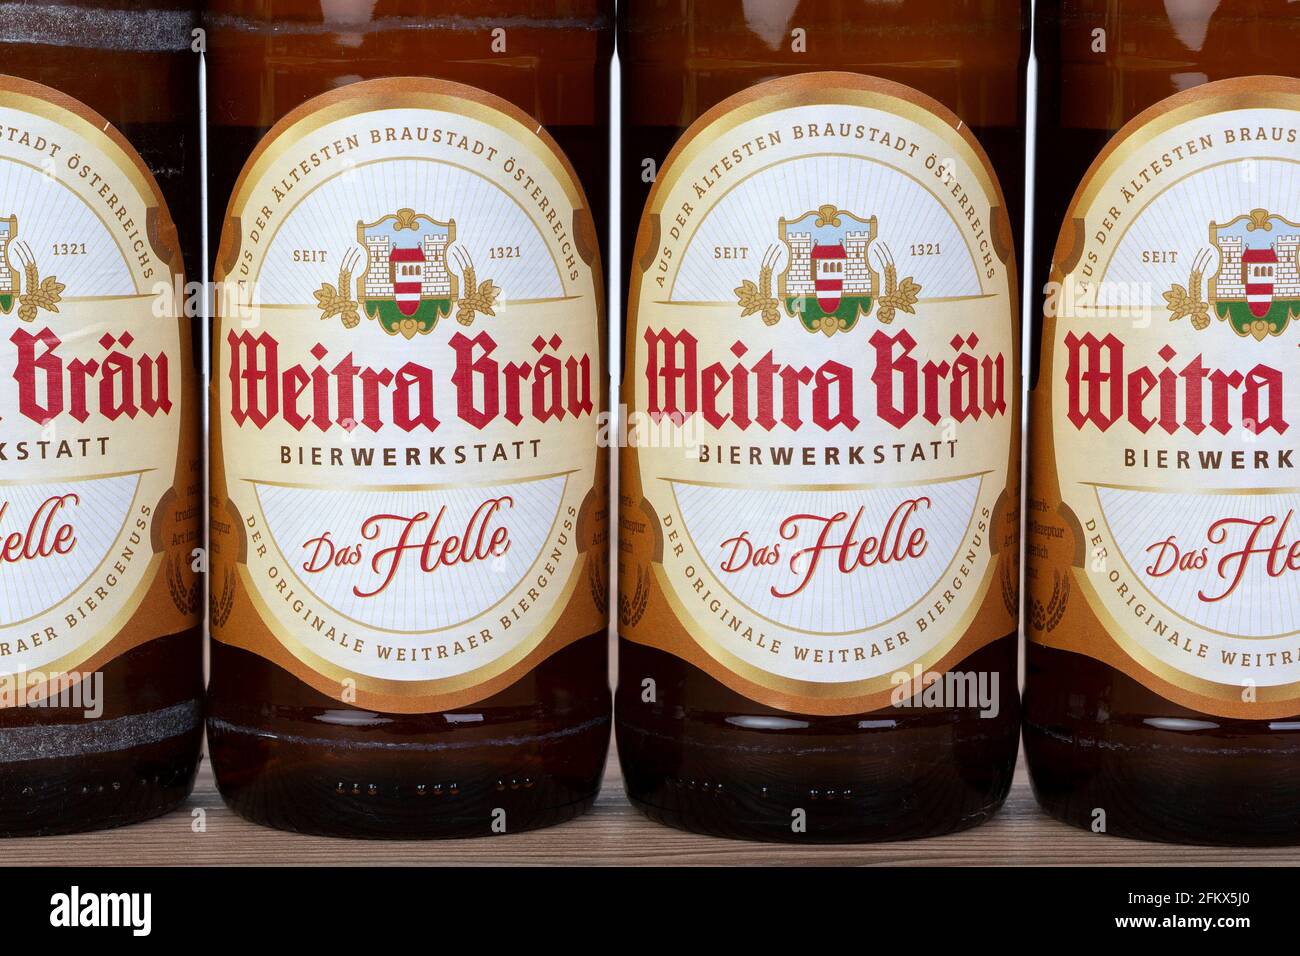 Weitra Bräu, Private Brewery Weitra, Austria Stock Photo